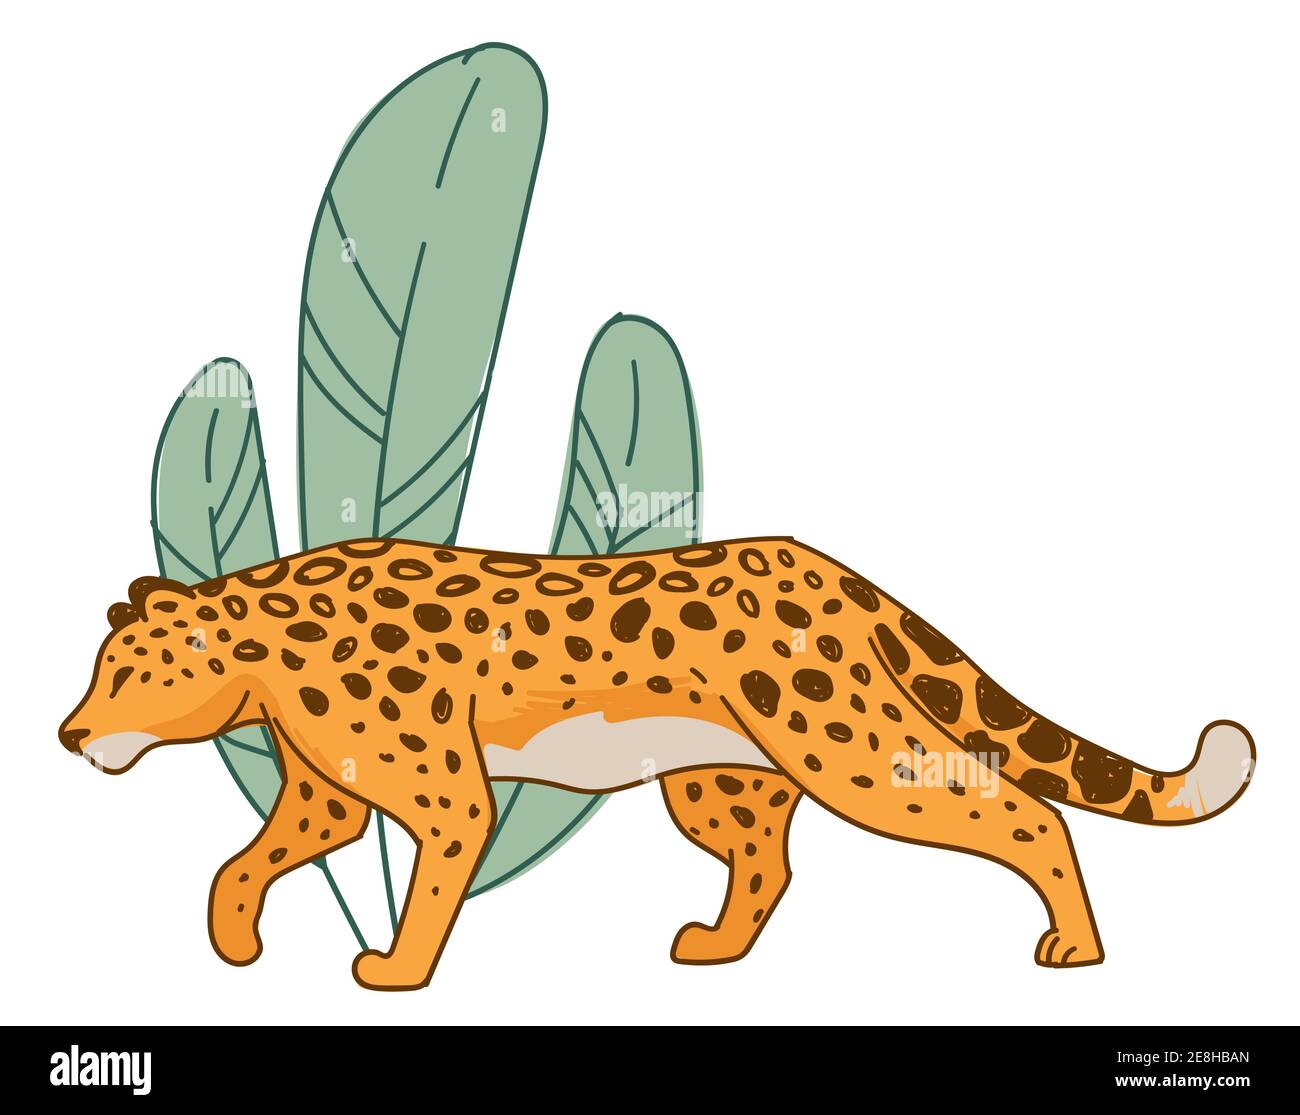 Hunting cheetah, feline animal hiding by leaves Stock Vector